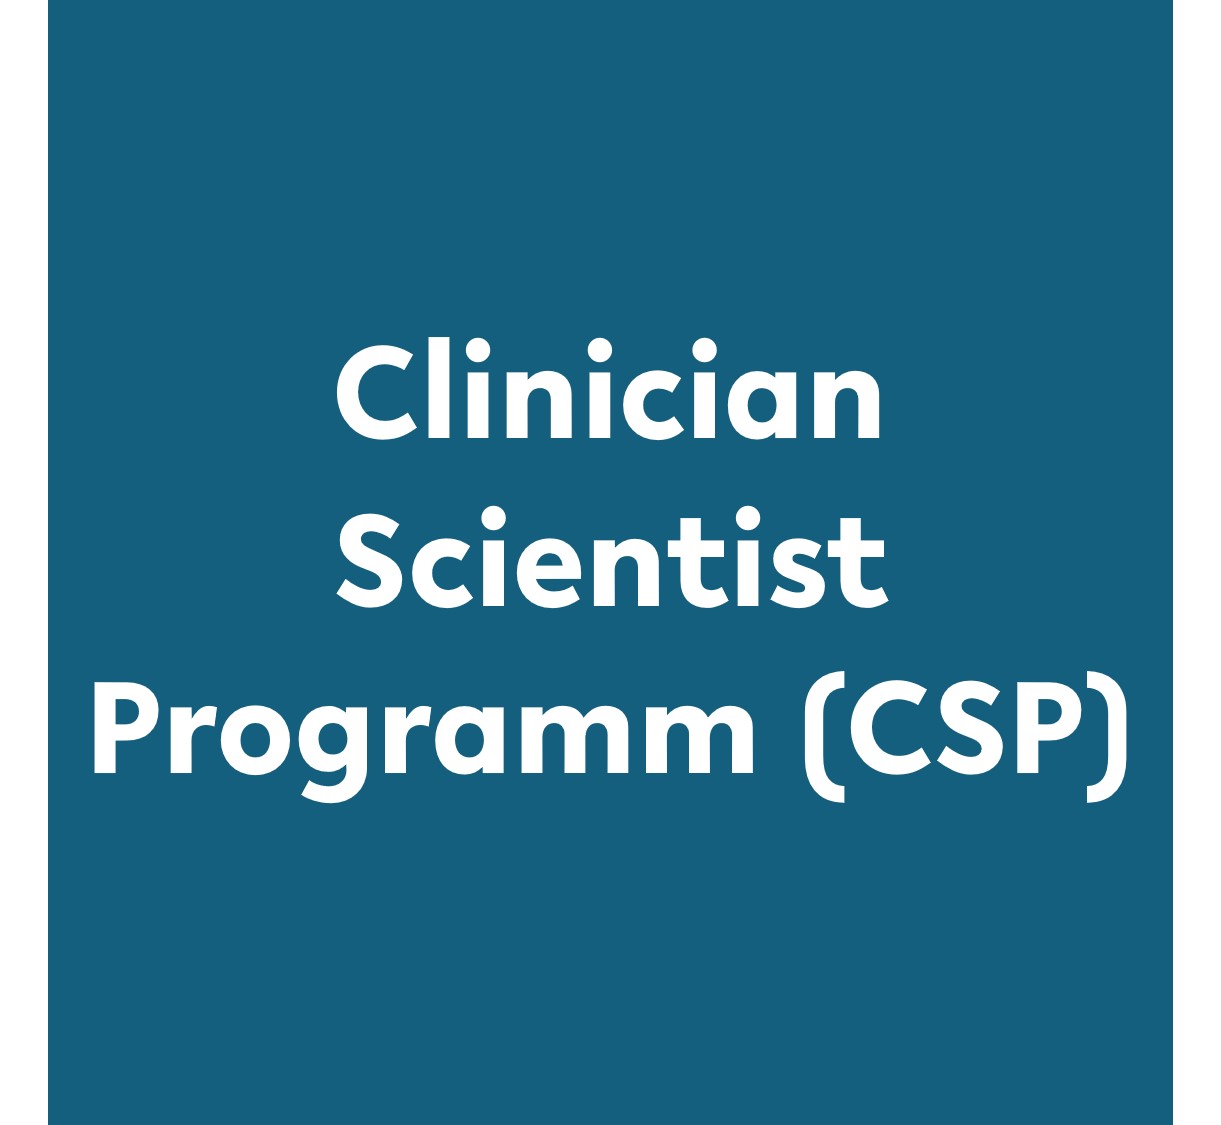 Clinician Scientist Programm (CSP)